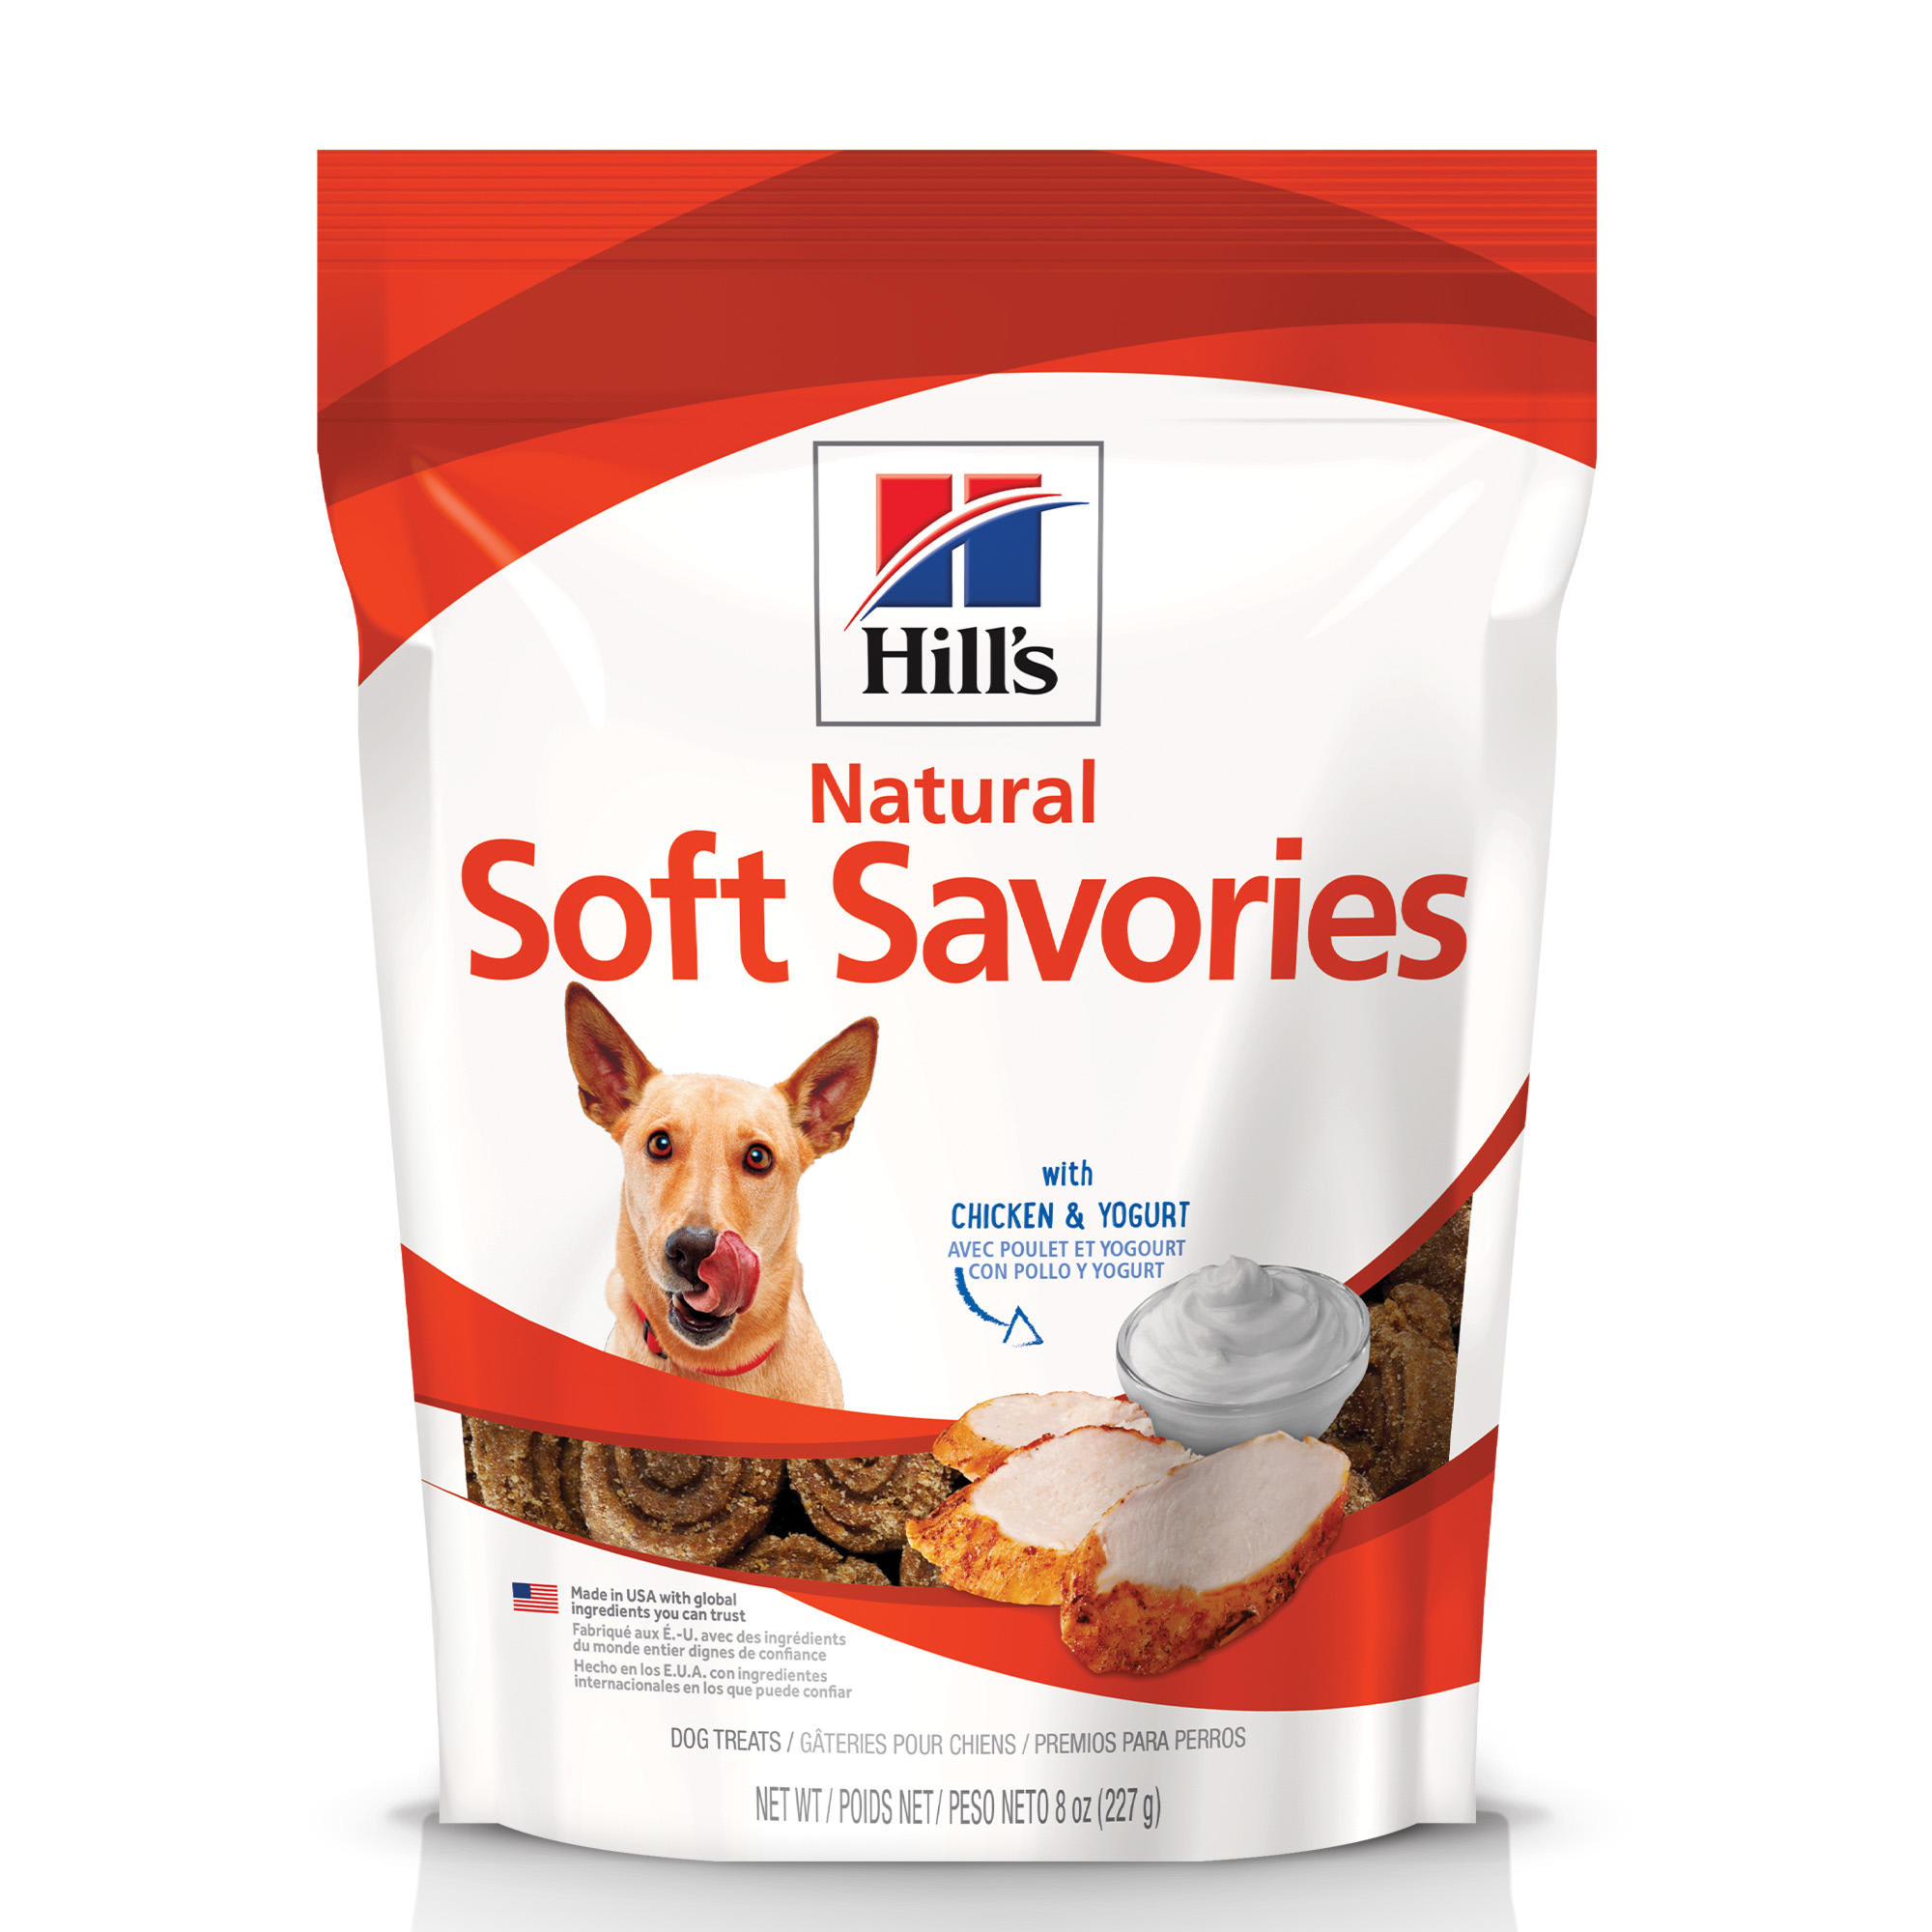 Photos - Dog Food Hills Hill's Hill's Natural Soft Savory Dog Treats with Chicken & Yogurt, 8 oz., 